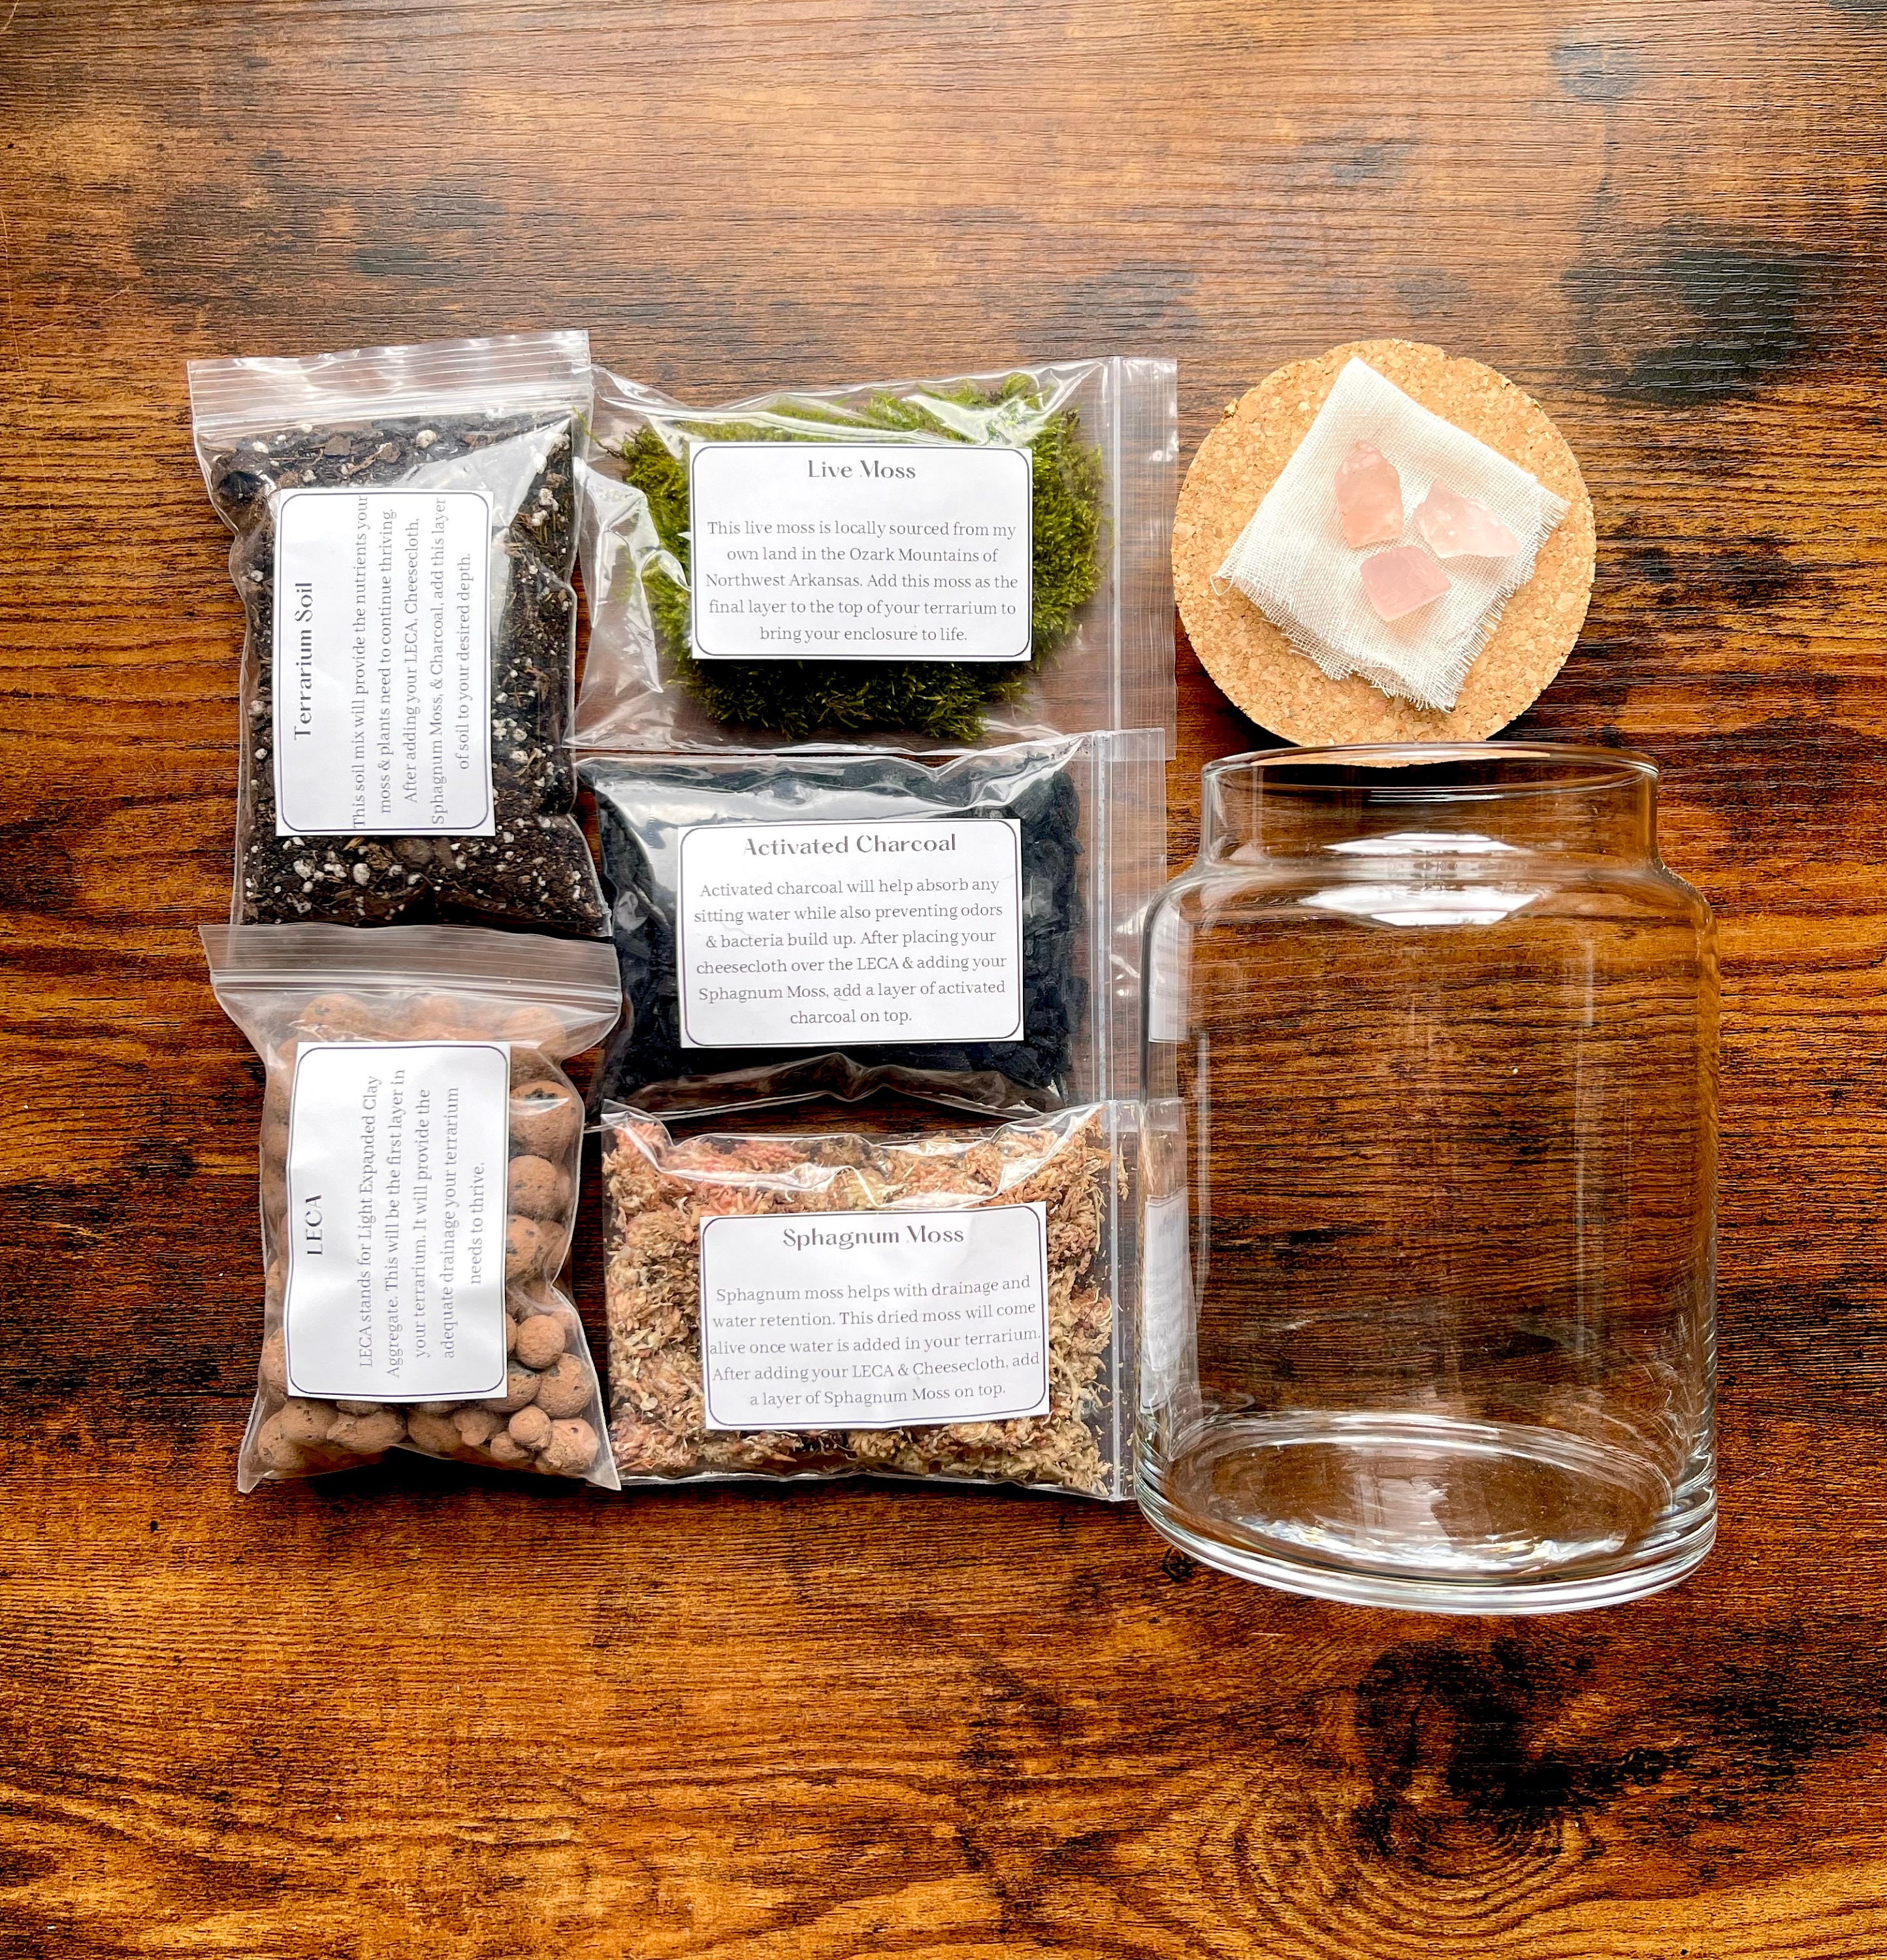 Organic Soil for Moss-stuffed 6x6 Sandwich Bag Full-terrarium Soil-3 Cup  Bag 